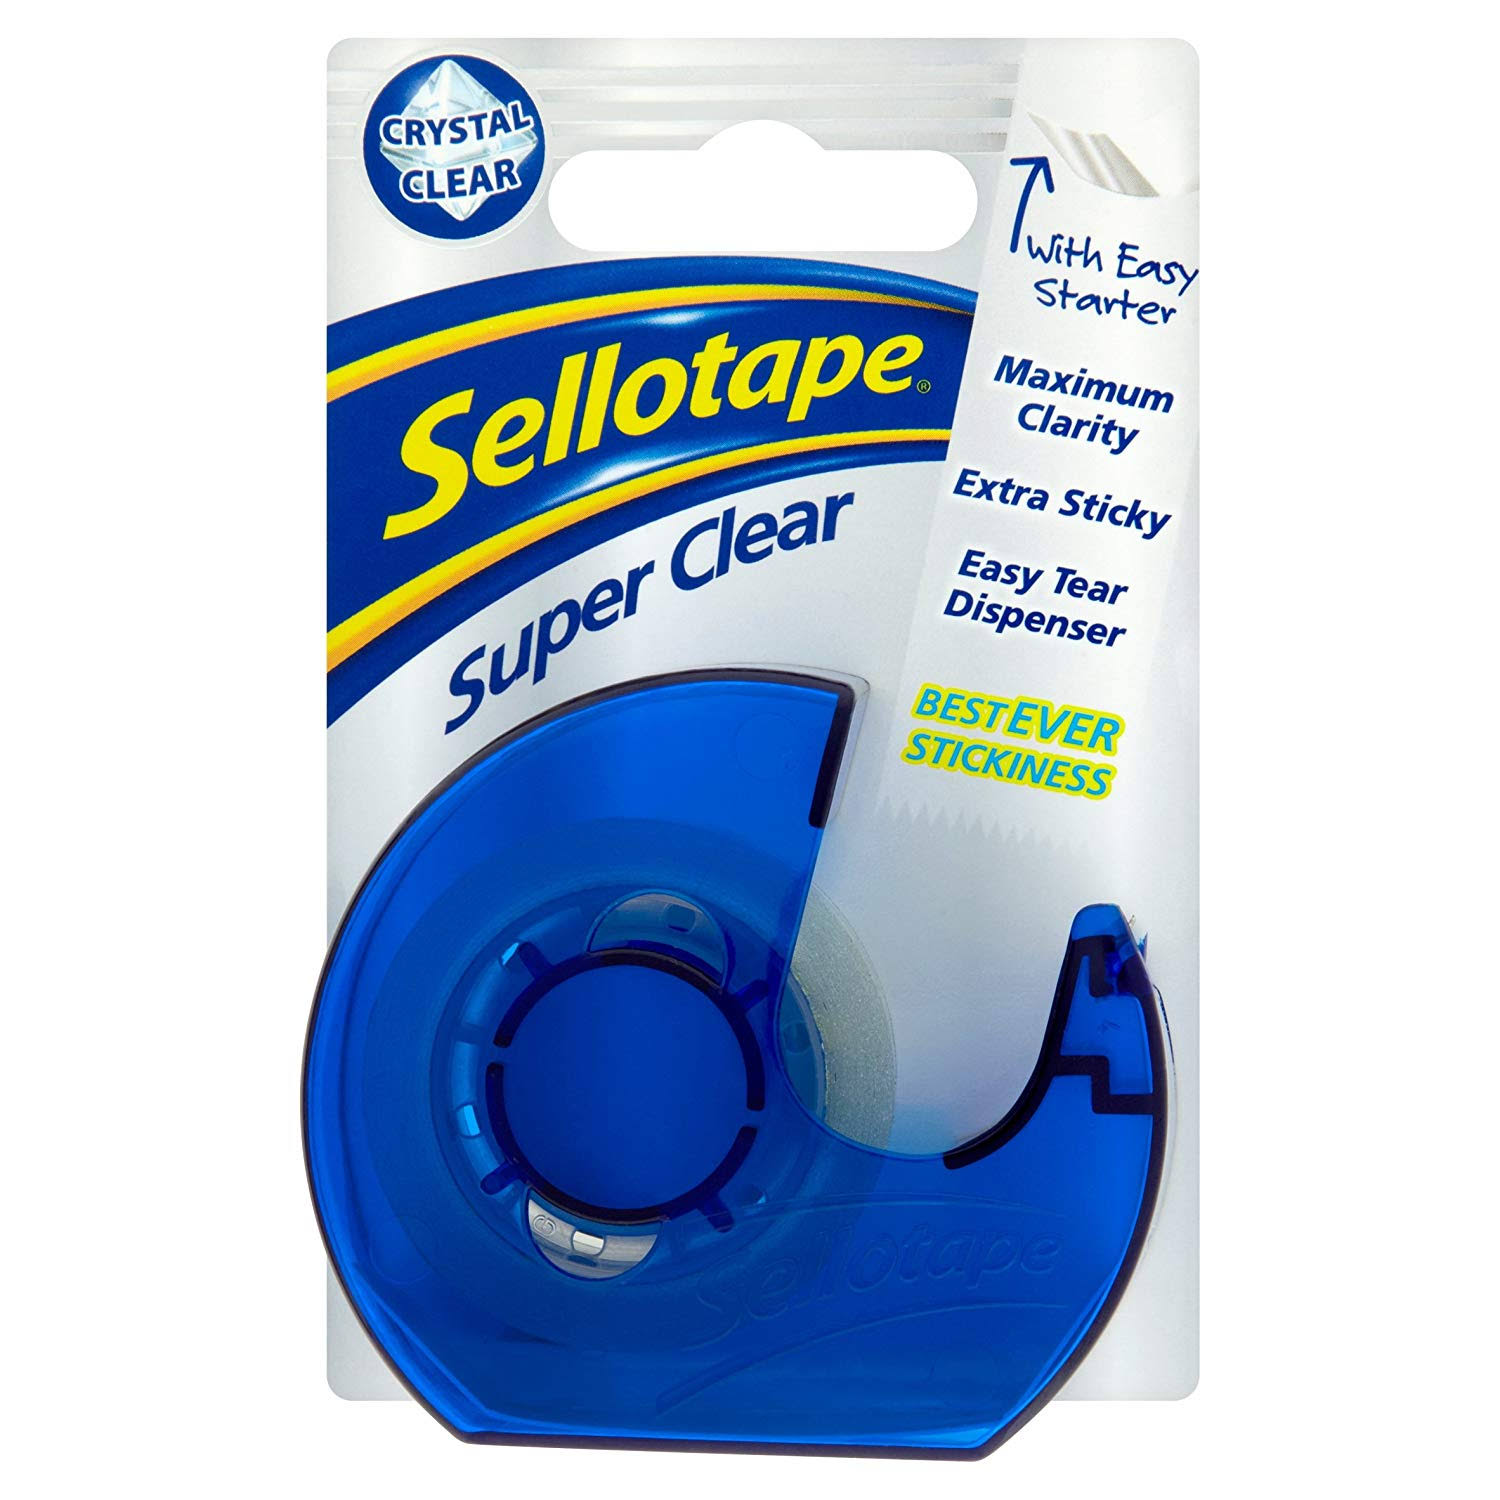 Sellotape Super Clear Tape & Dispenser - 18mm x 15m